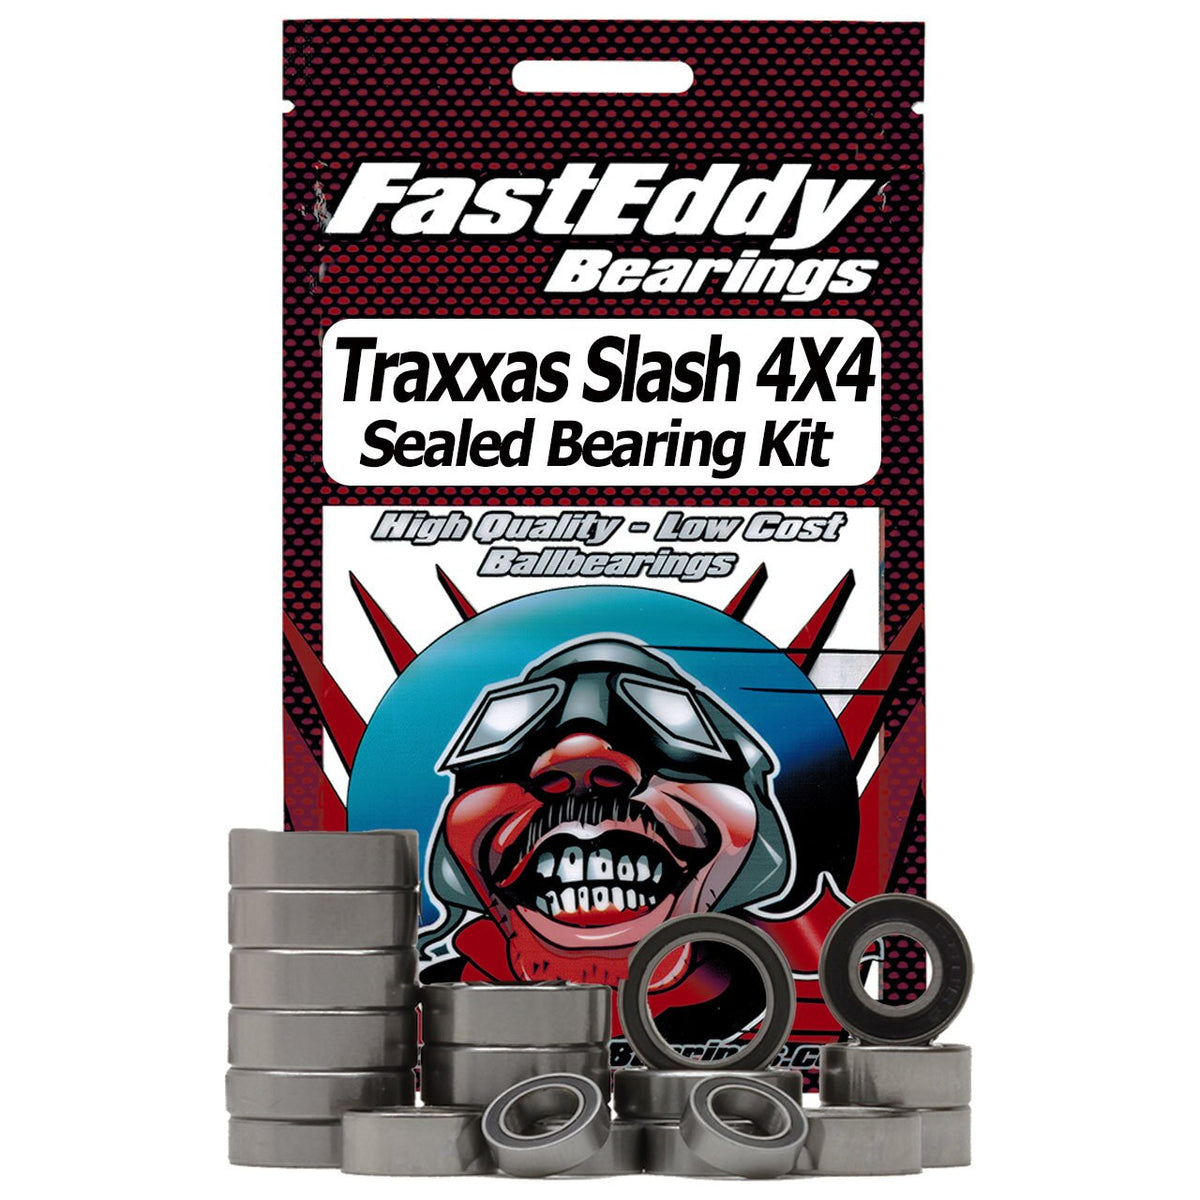 Fast Eddy Traxxas Slash 4X4 RTR TQi Sealed Bearing Kit (TFE2190)